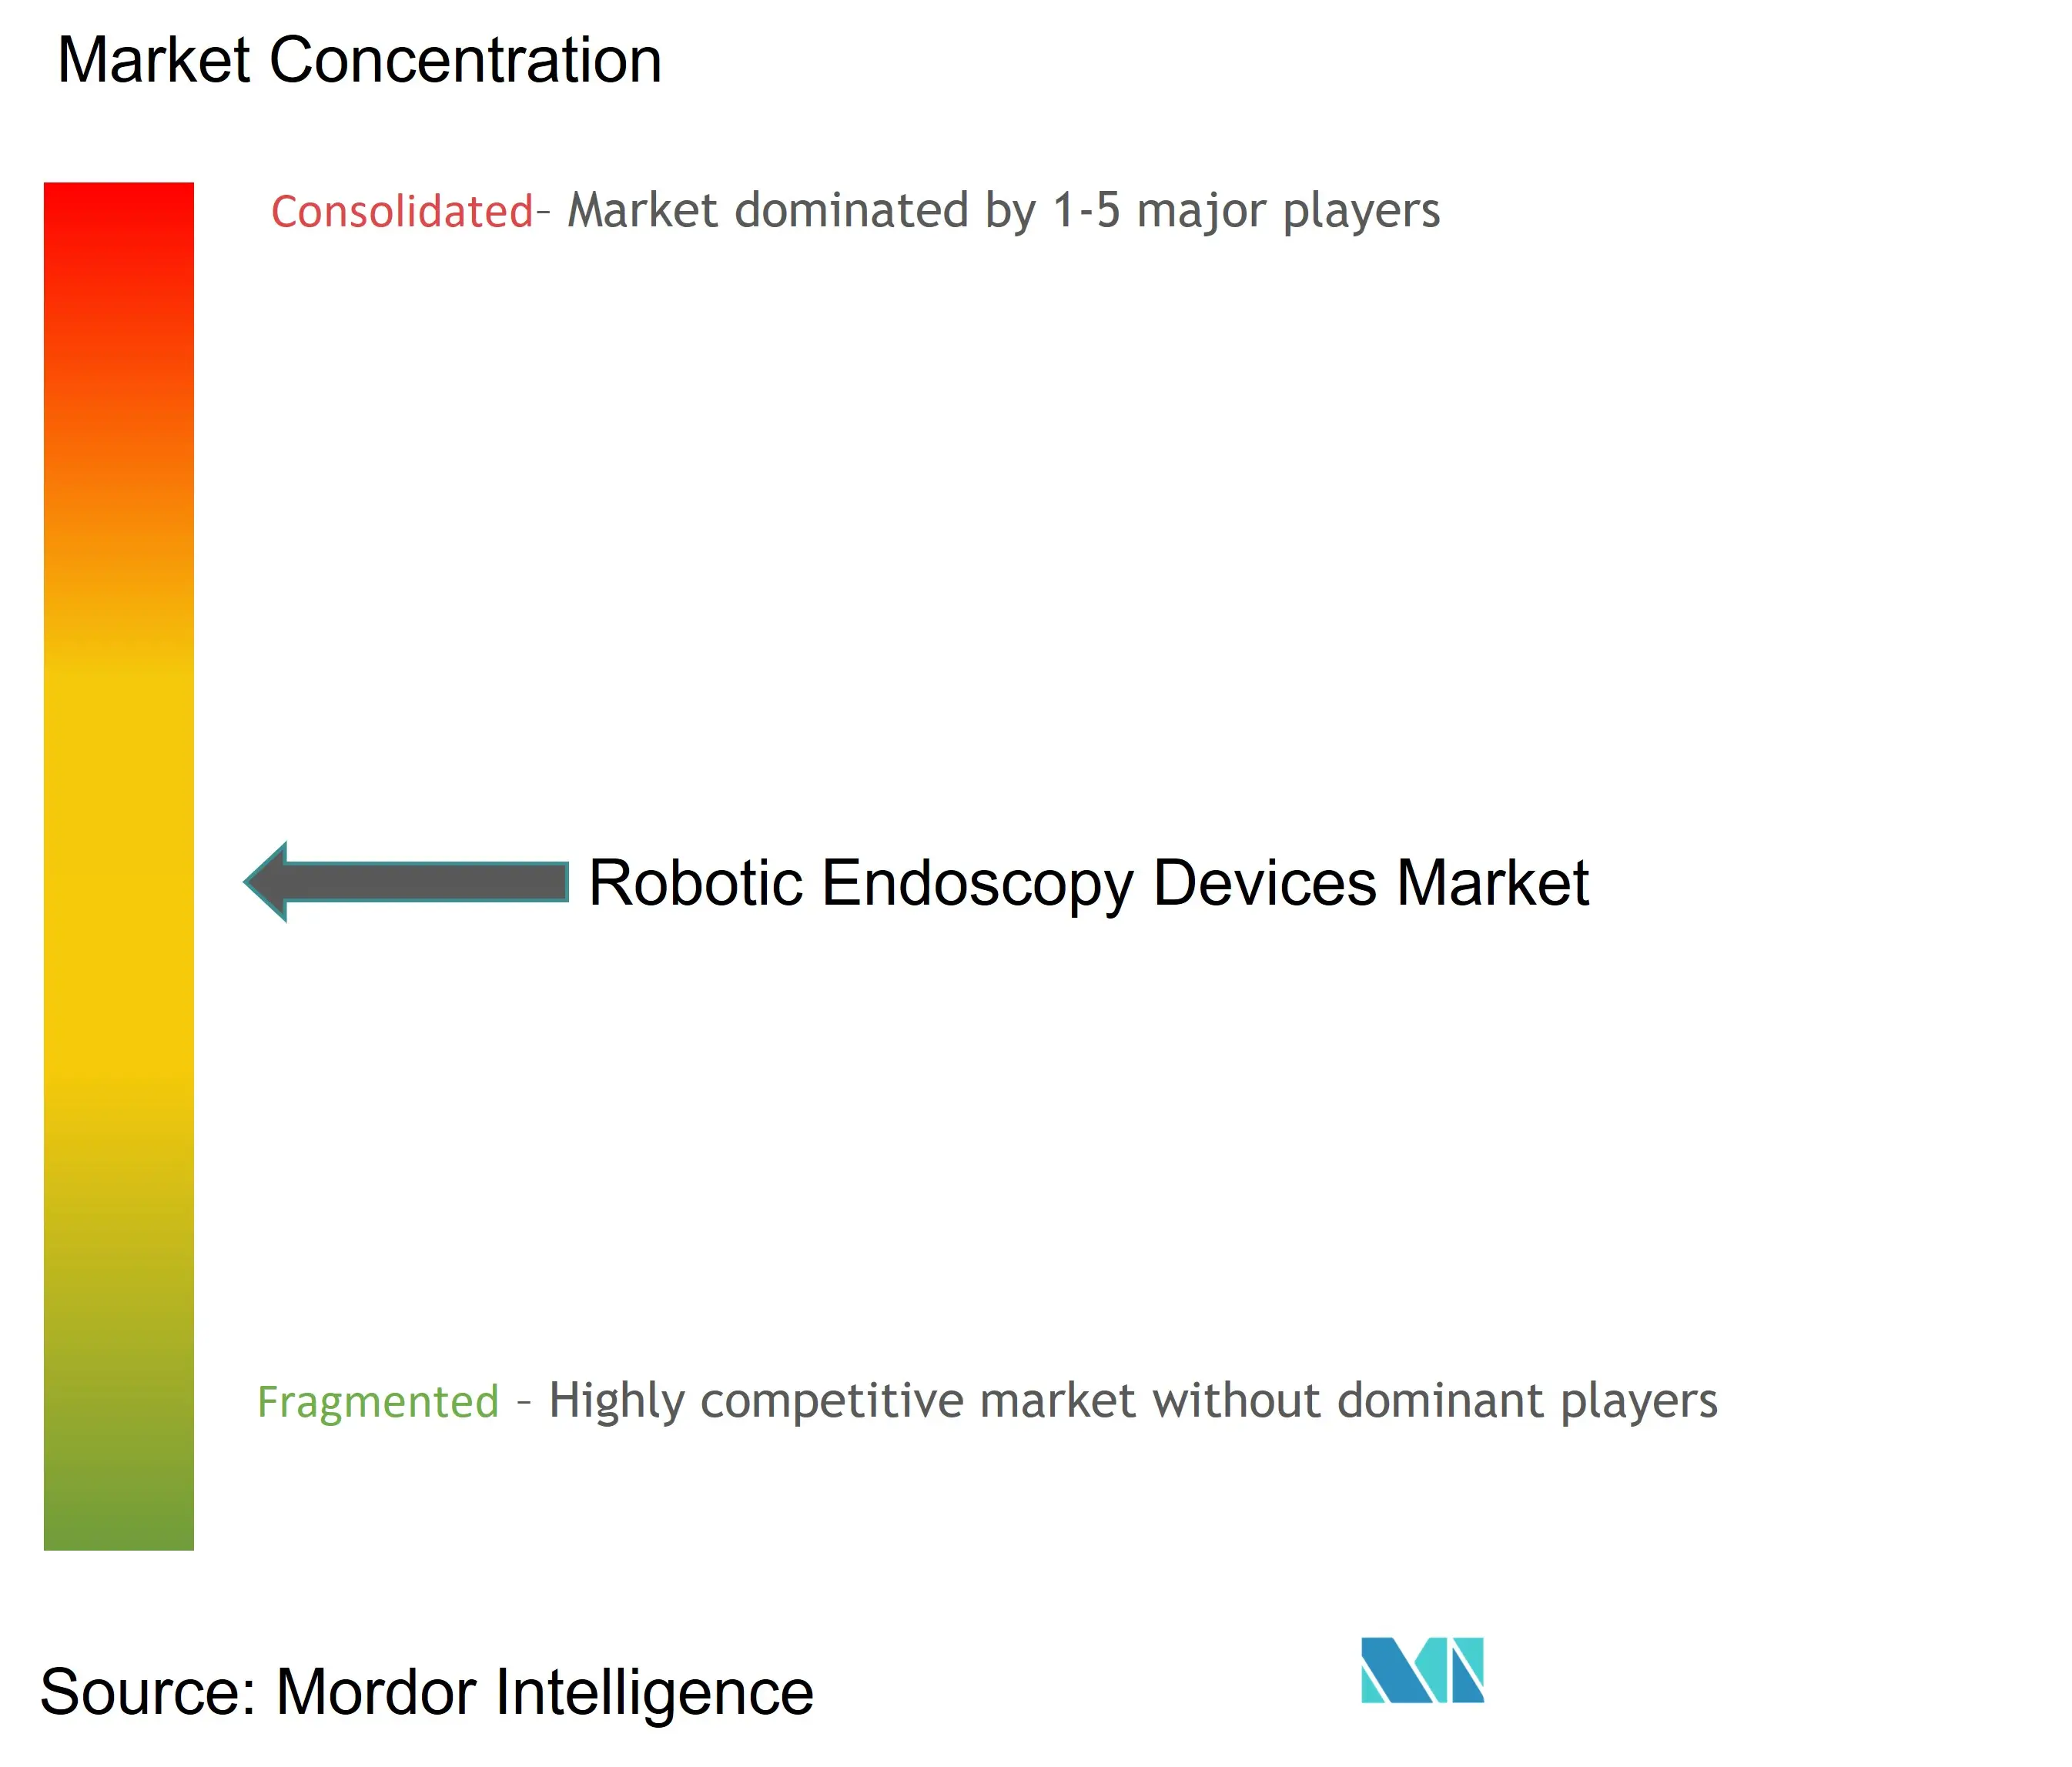 Robotic Endoscopy Devices Market Concentration